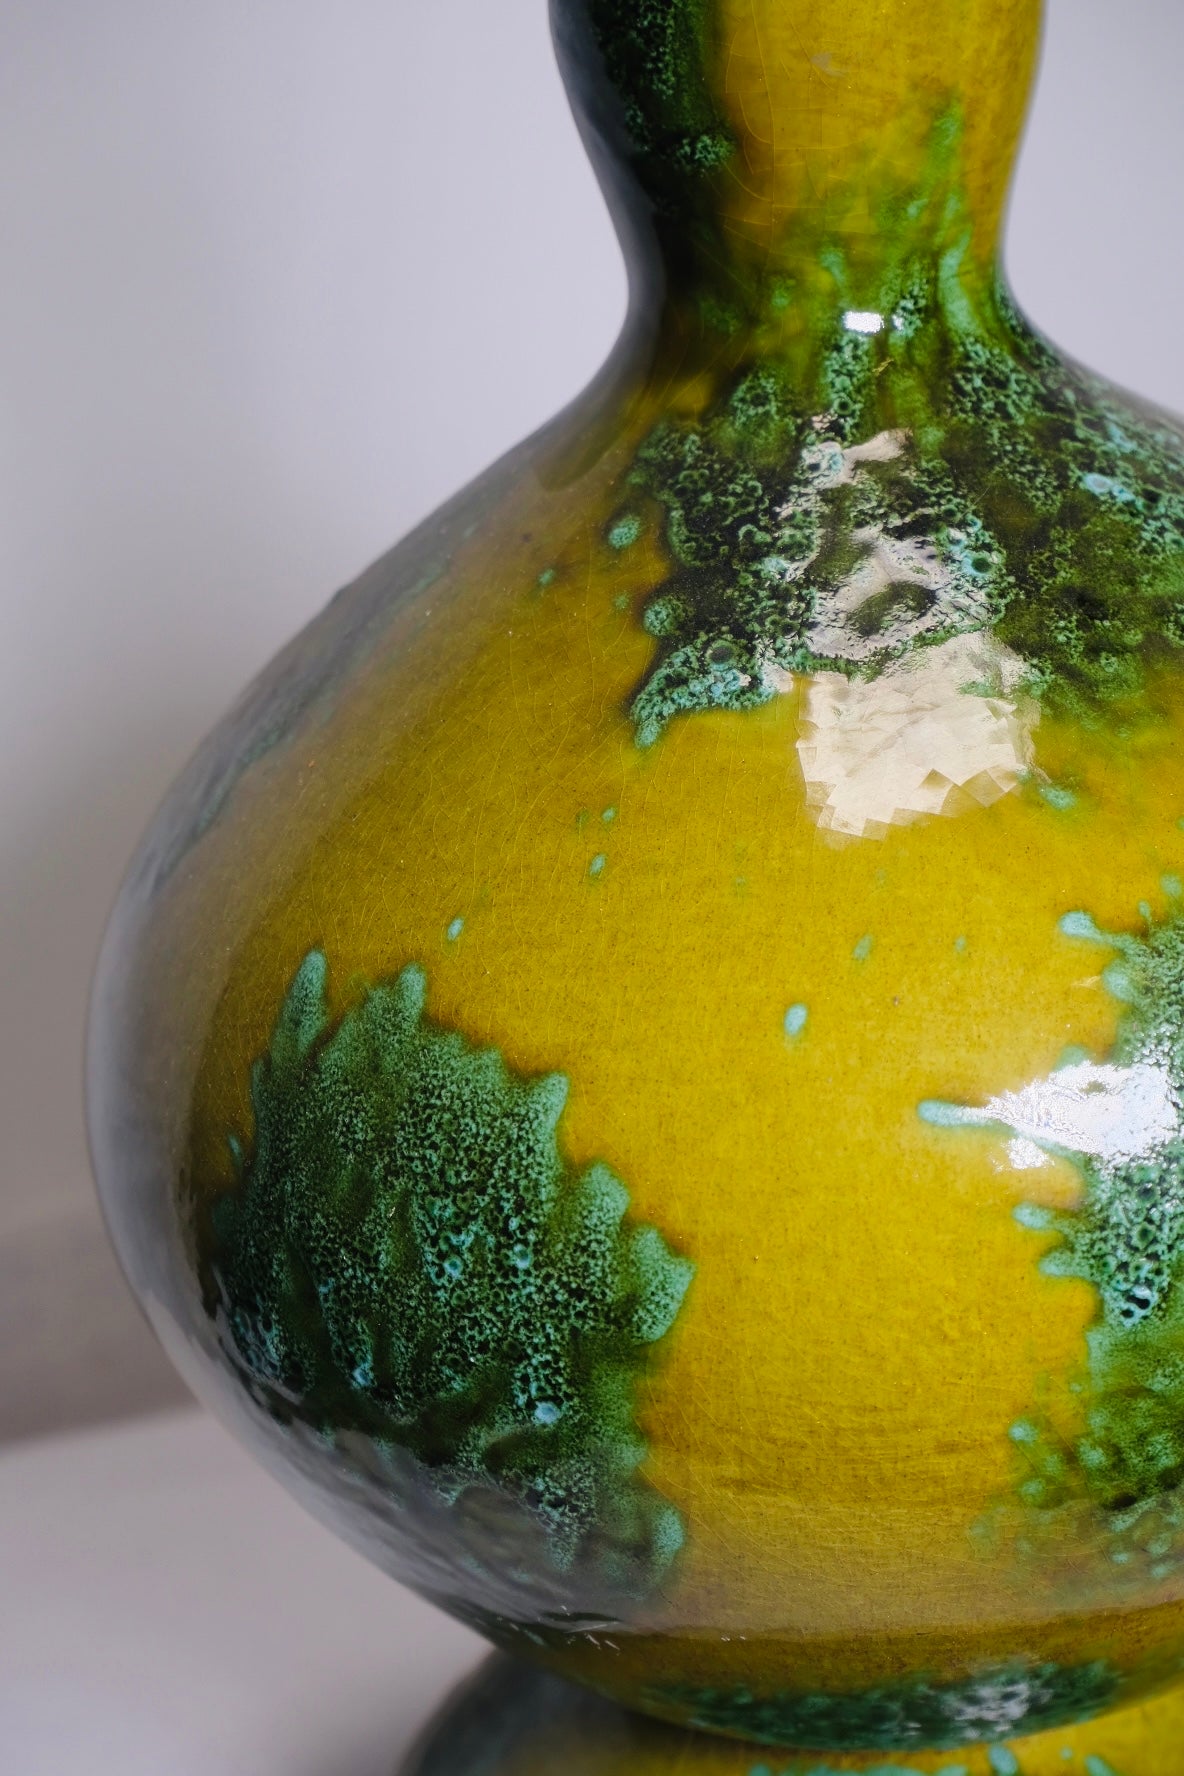 Green 1960s Gourd-like Glaze Lamp (Vintage)